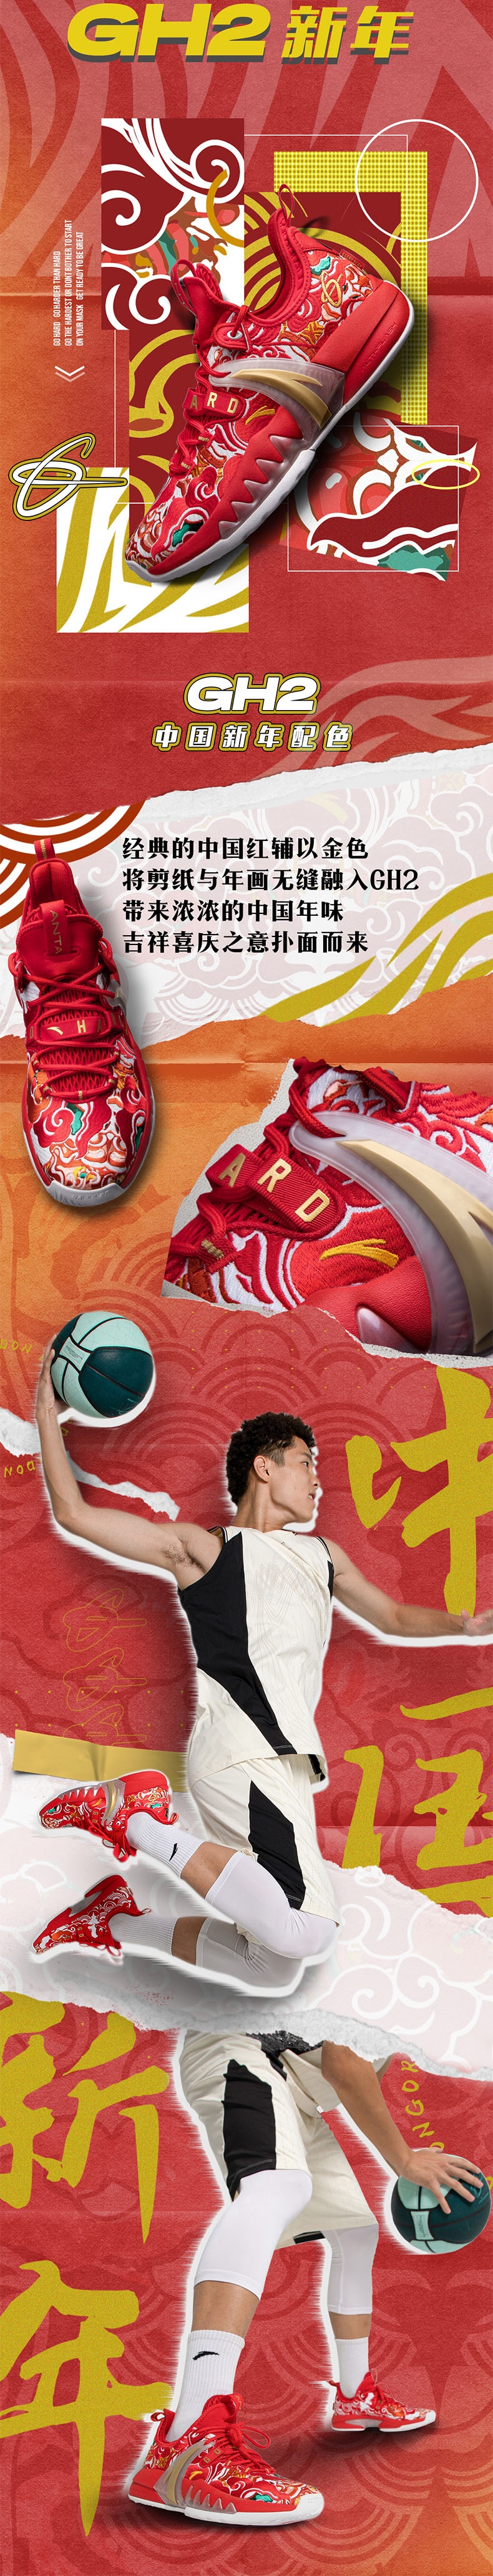 Anta GH2 "Chinese New Year" Gordon Hayward Low Basketball Sneakers